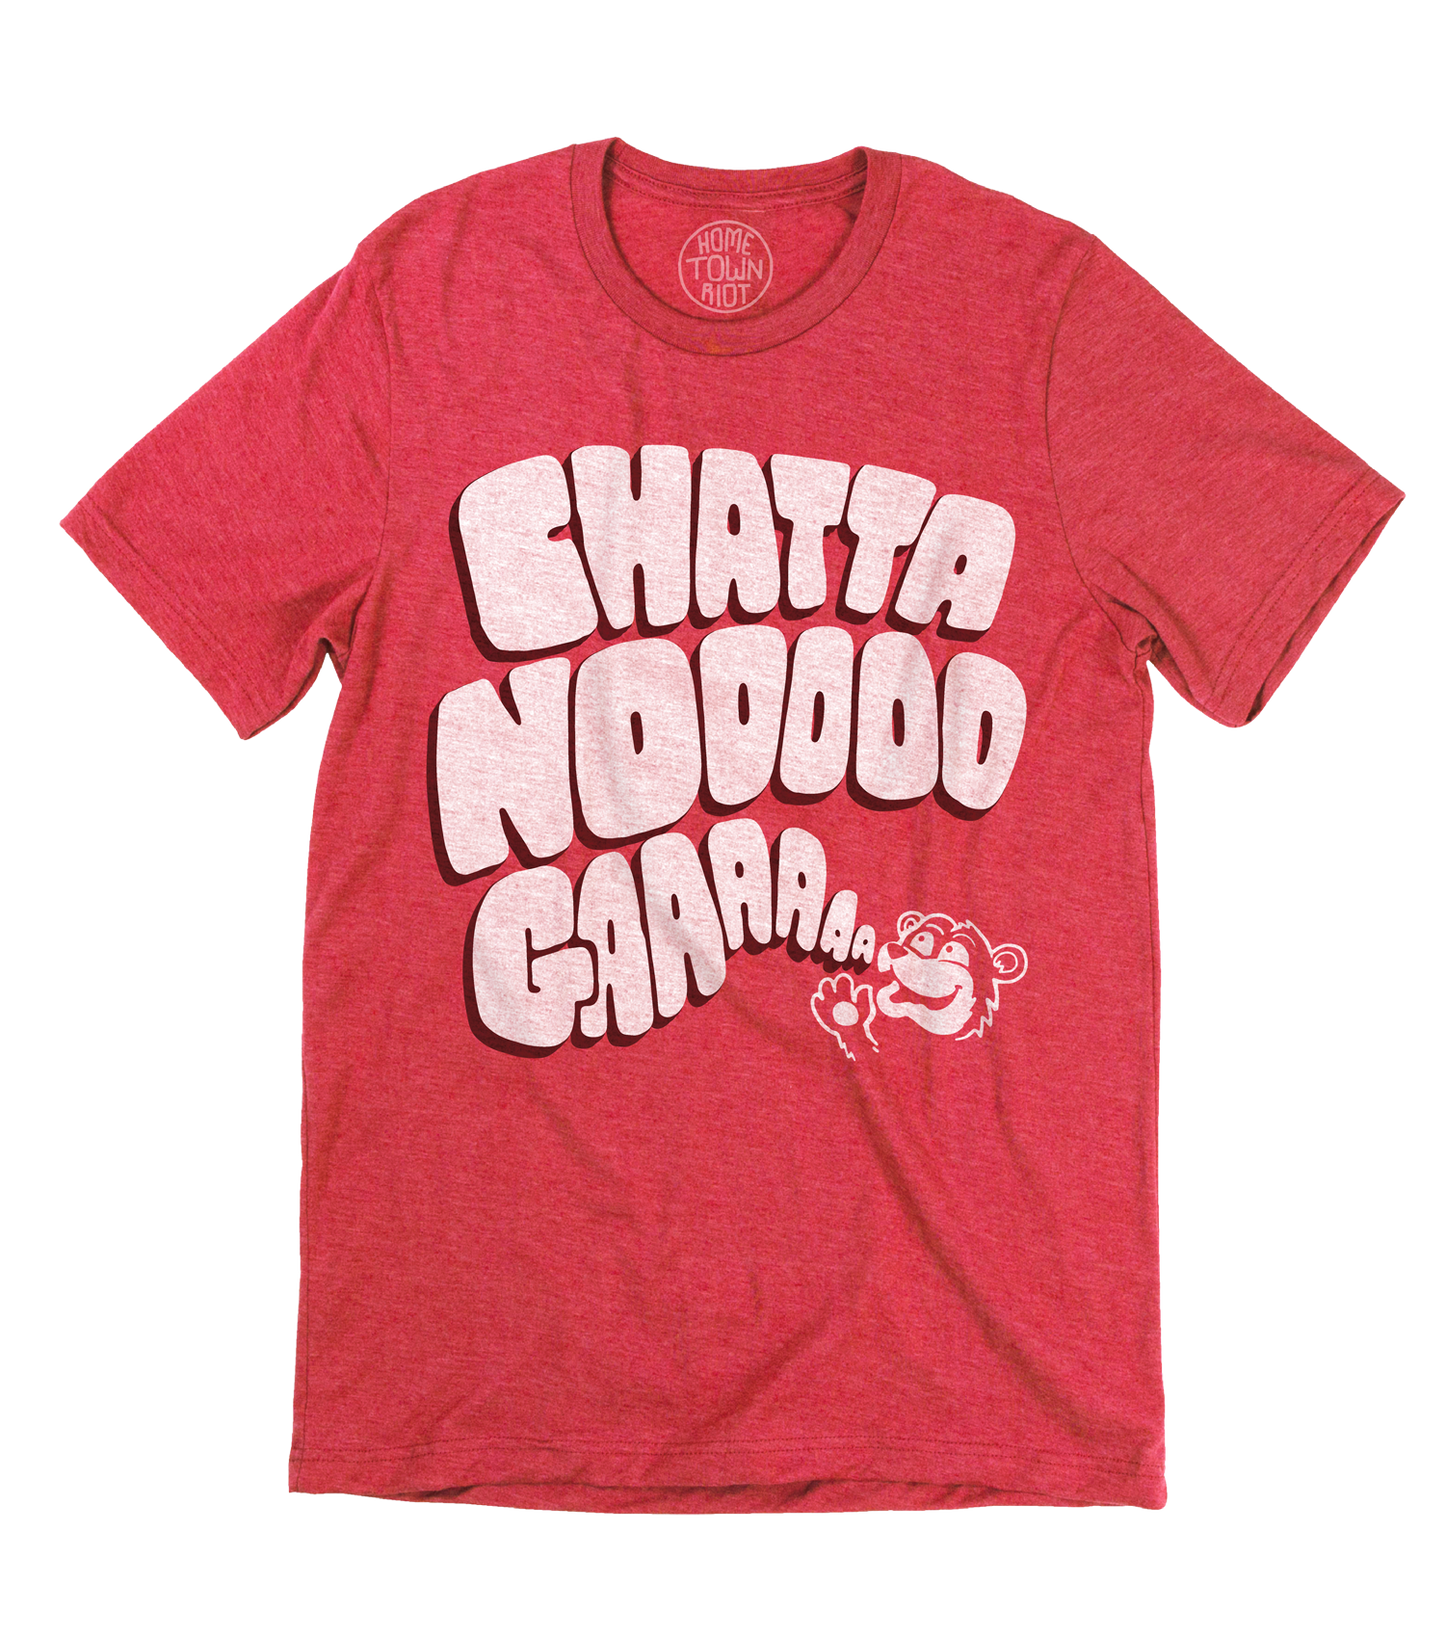 Chattanooga Shout Shirt